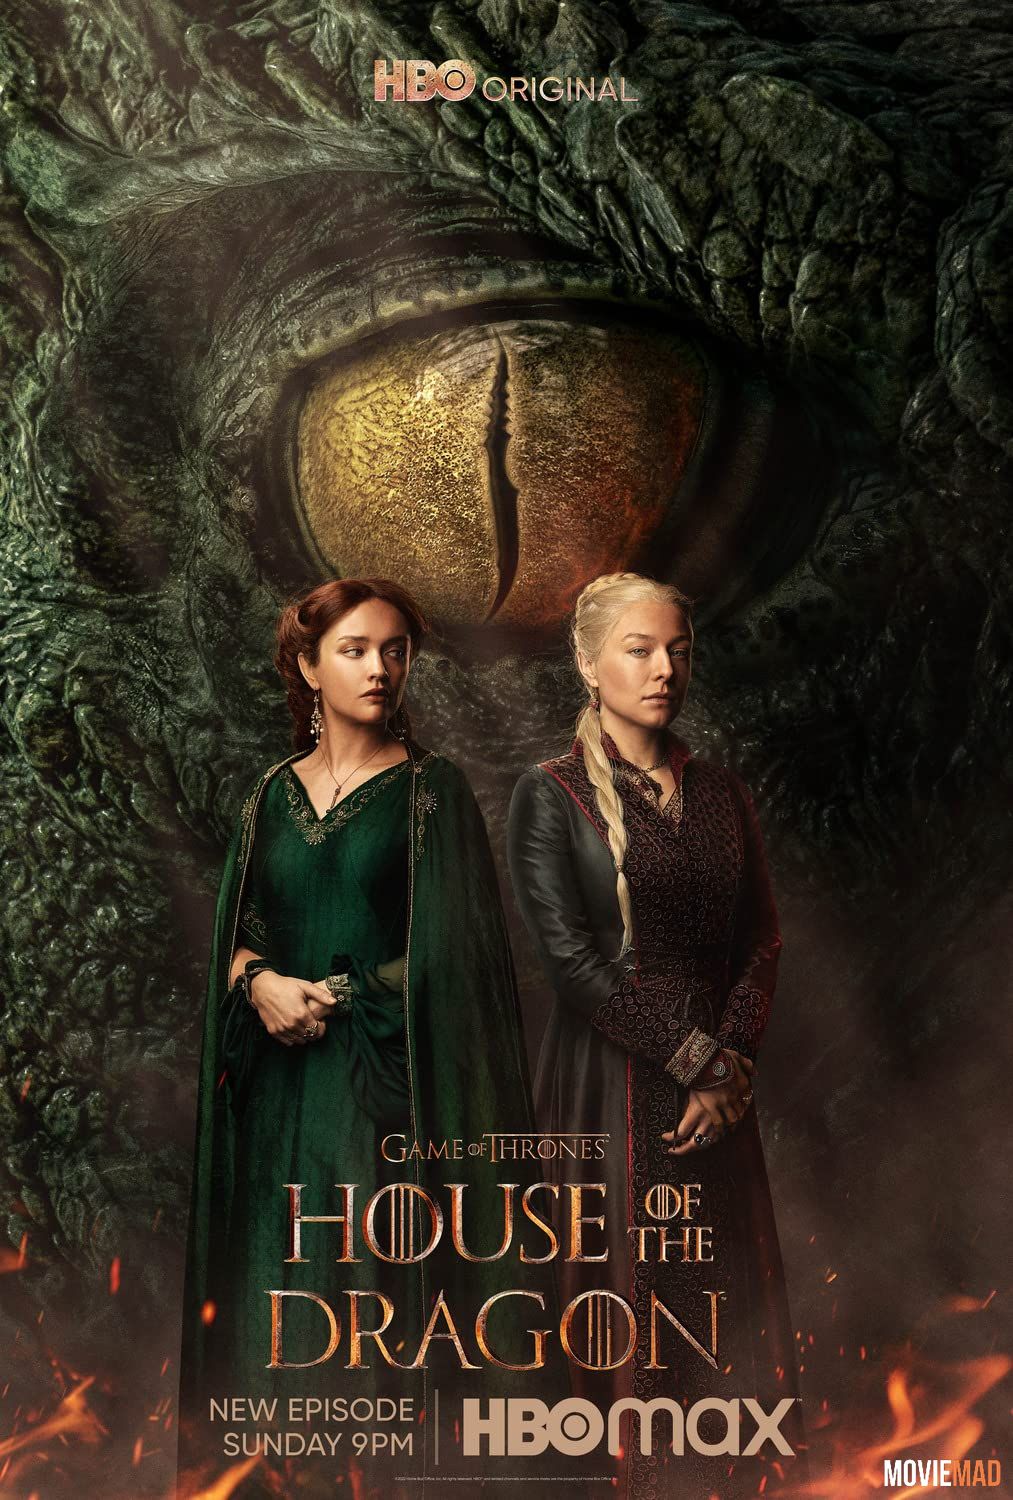 House Of The Dragon S01E07 (2022) English HBOMAX HDRip 720p 480p